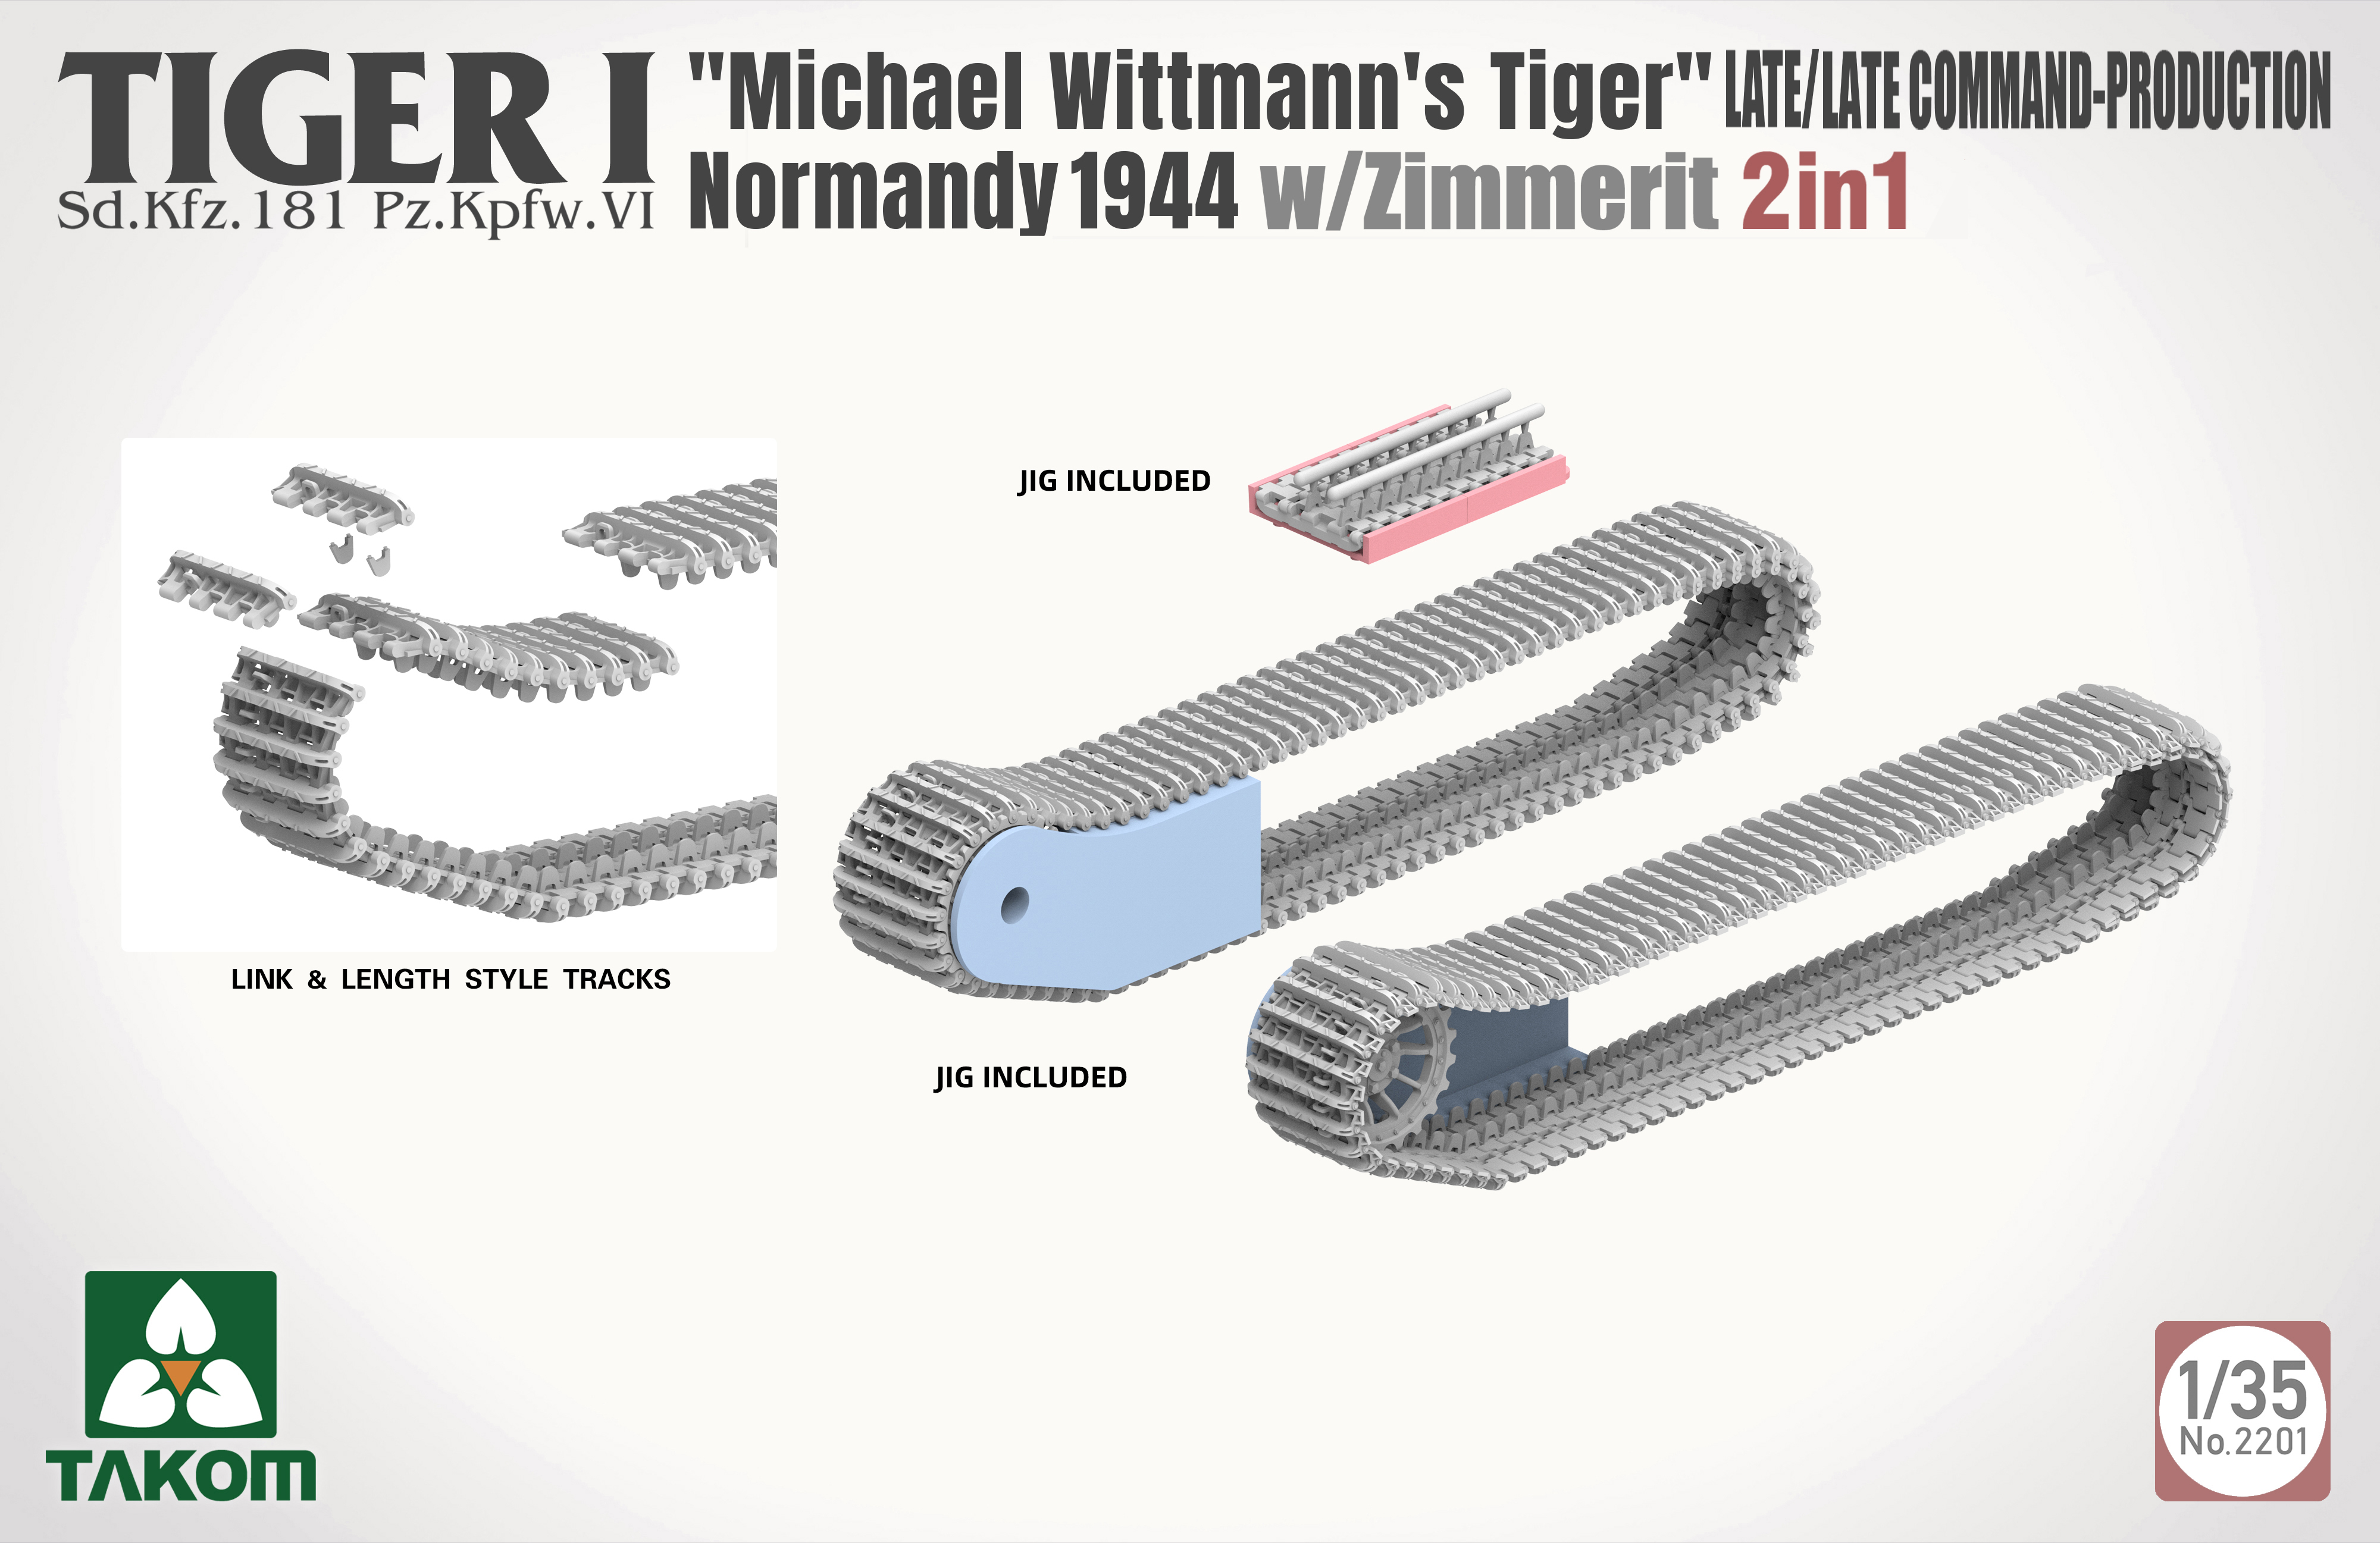 TIGER I LATE/LATE COMM. w/ZIMM. Michael Wittmann